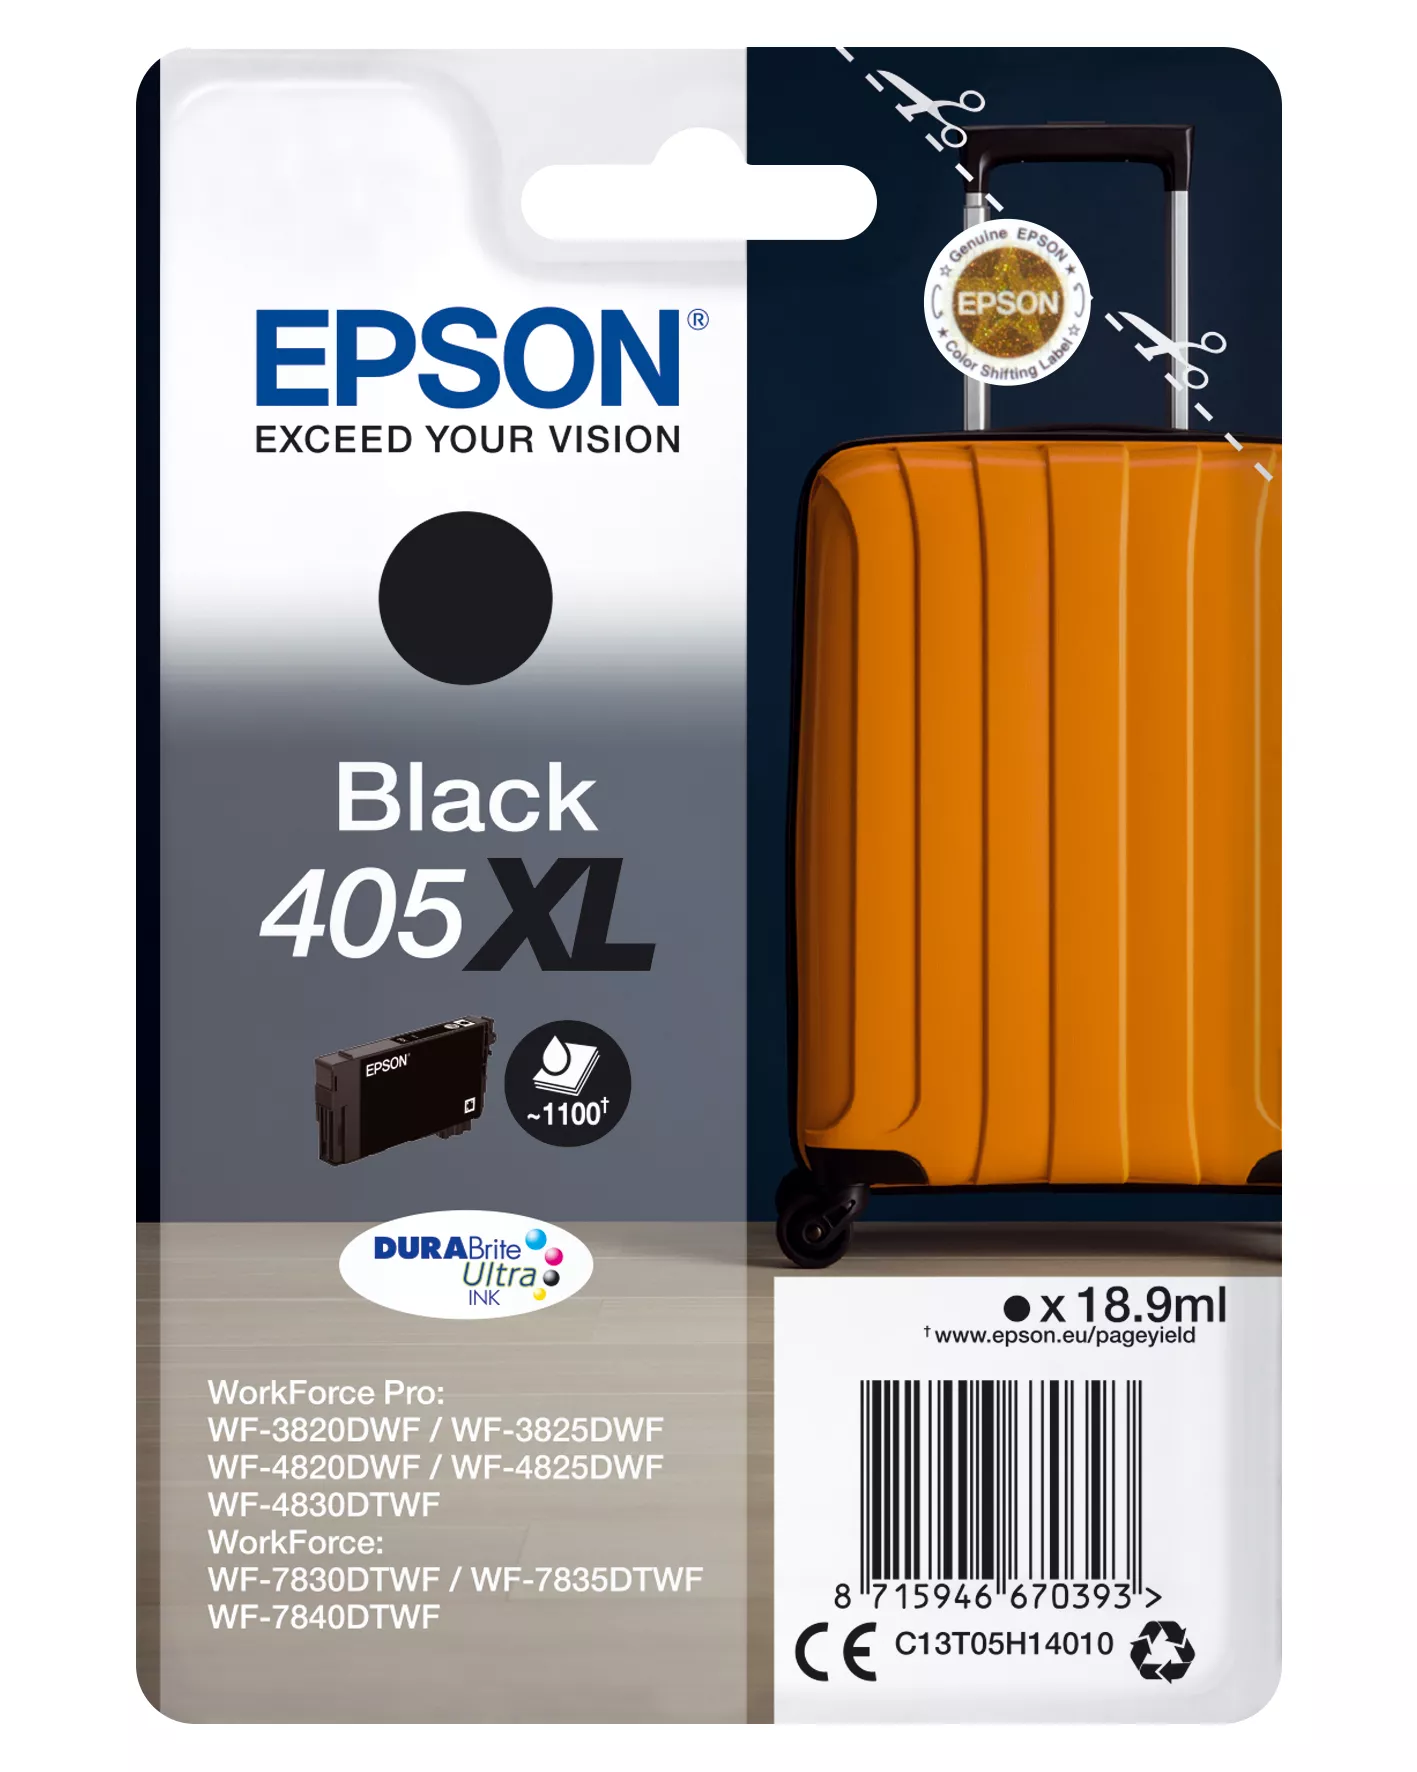 Achat Epson Singlepack Black 405XL DURABrite Ultra Ink au meilleur prix